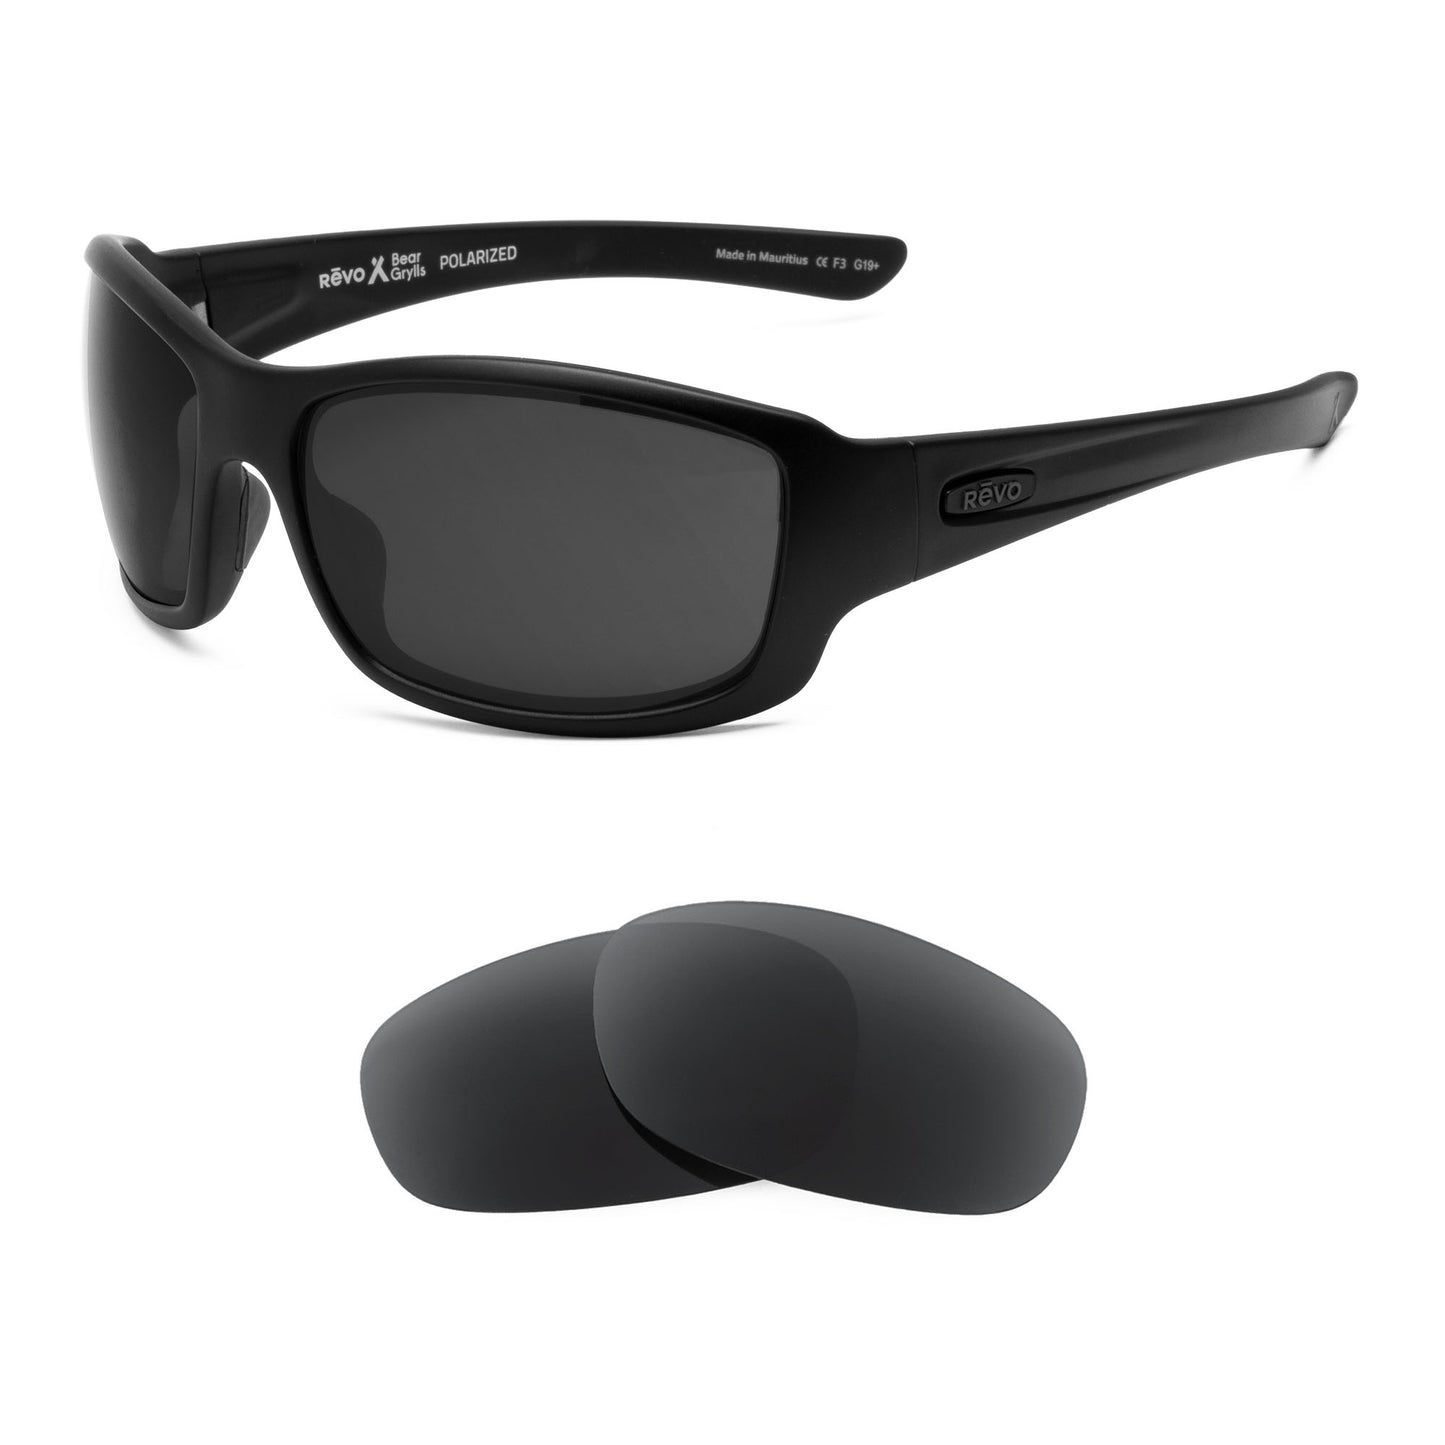 Revo Maverick sunglasses with replacement lenses